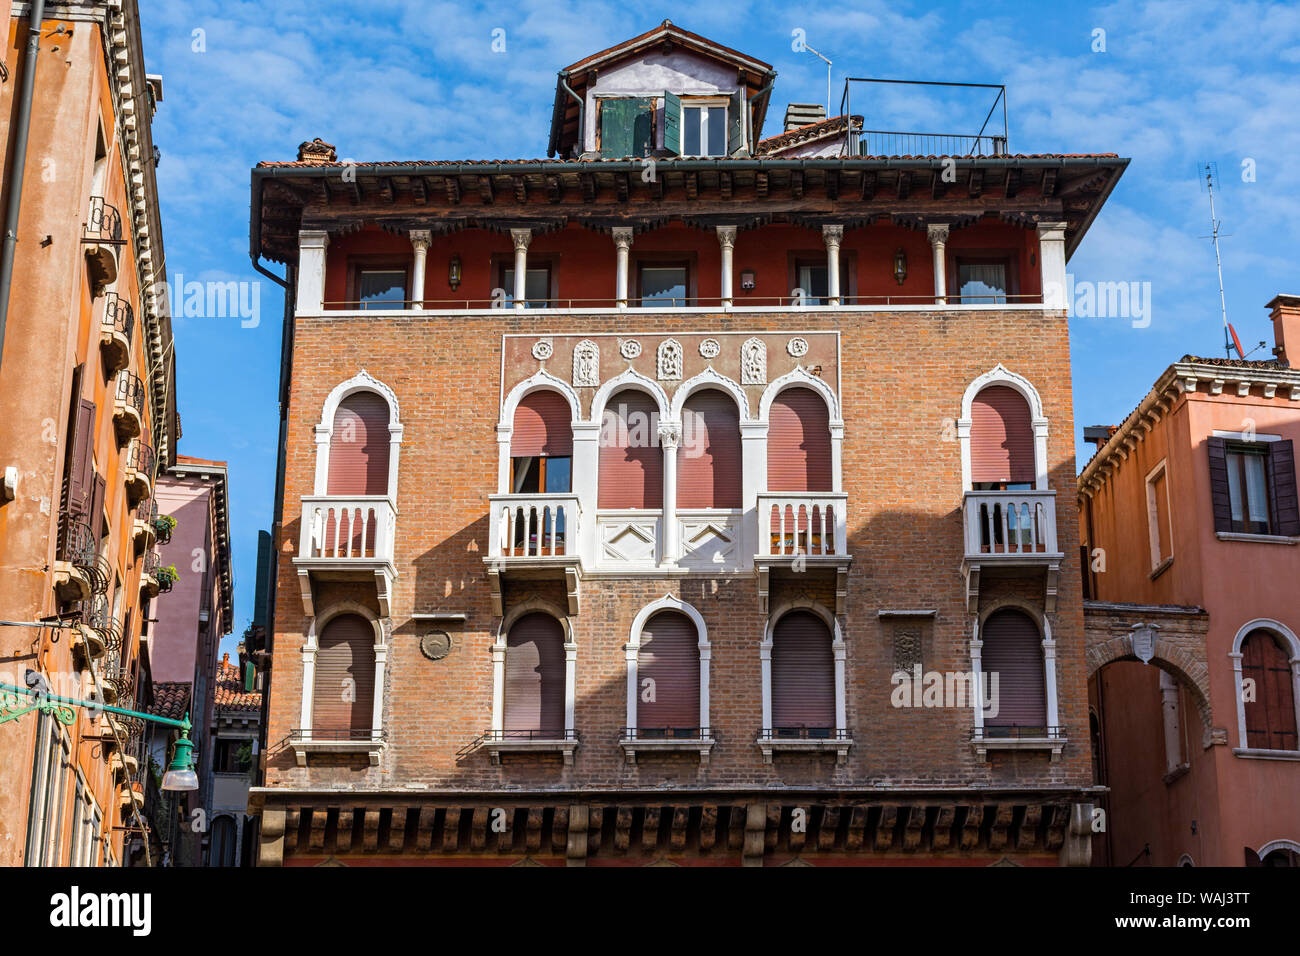 Ein Gebäude in Campo San Luca, Quadrat, Venedig, Italien Stockfoto